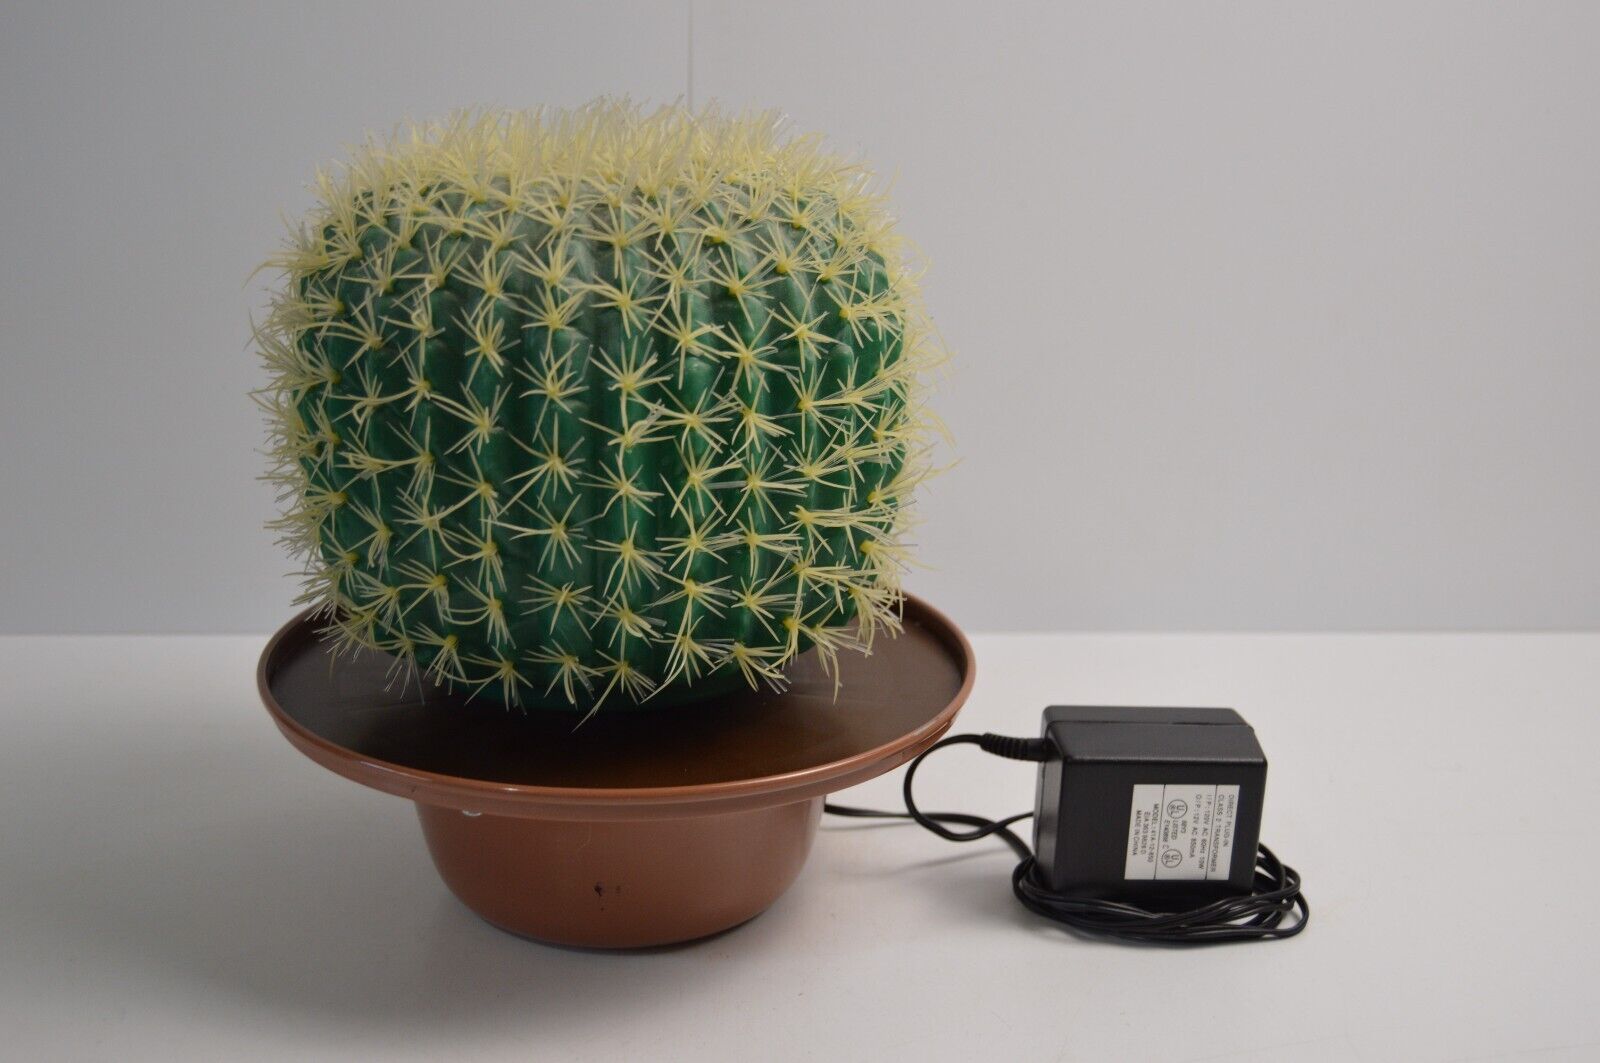 Vintage Fiber Optic Cactus Light Up WORKS Collectible Southwest Home Decor Lamp